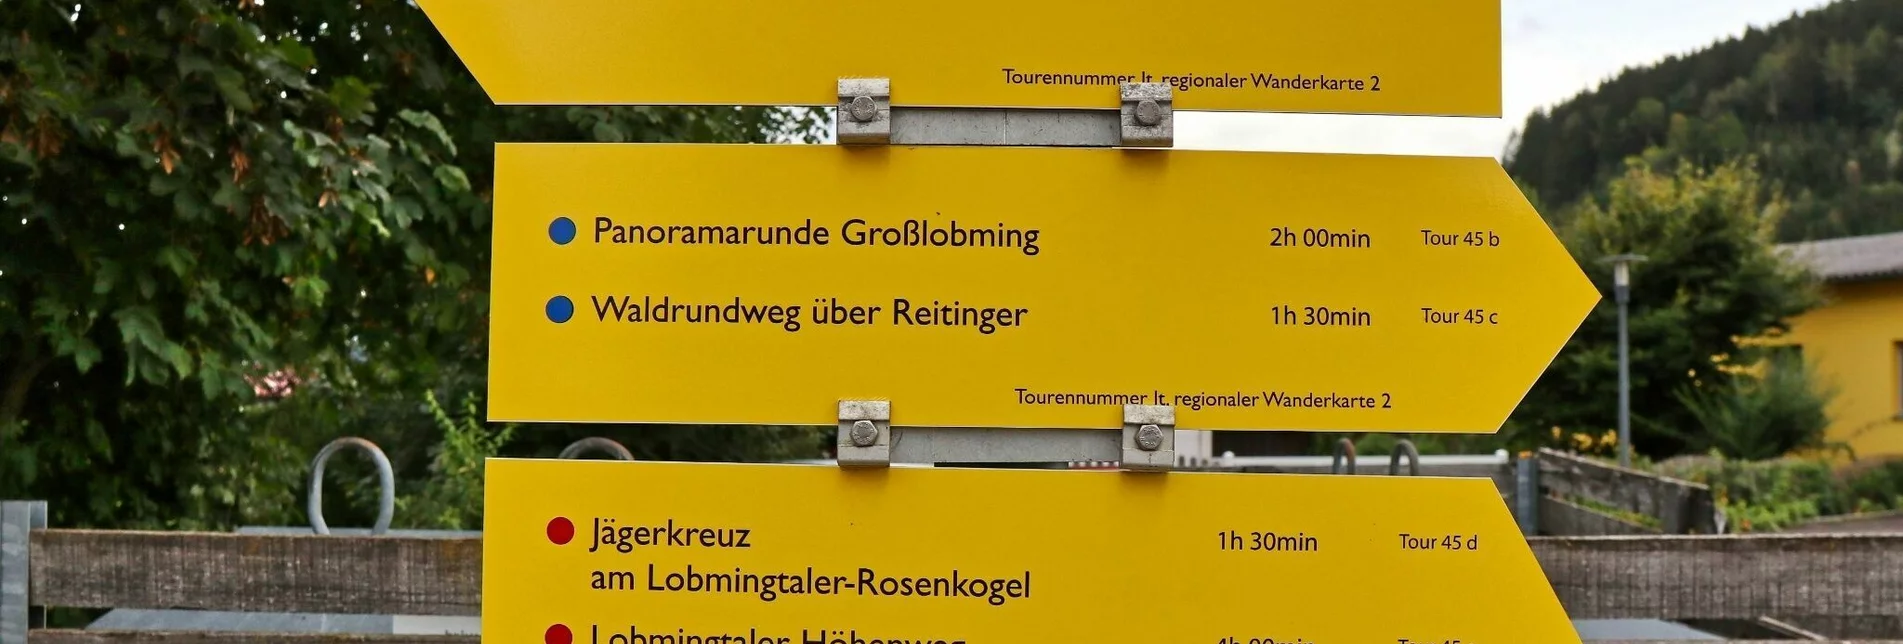 Hiking route Lobmingtaler Höhenweg - A long-distance hike from Großlobming to Kleinlobming - Touren-Impression #1 | © WEGES OG